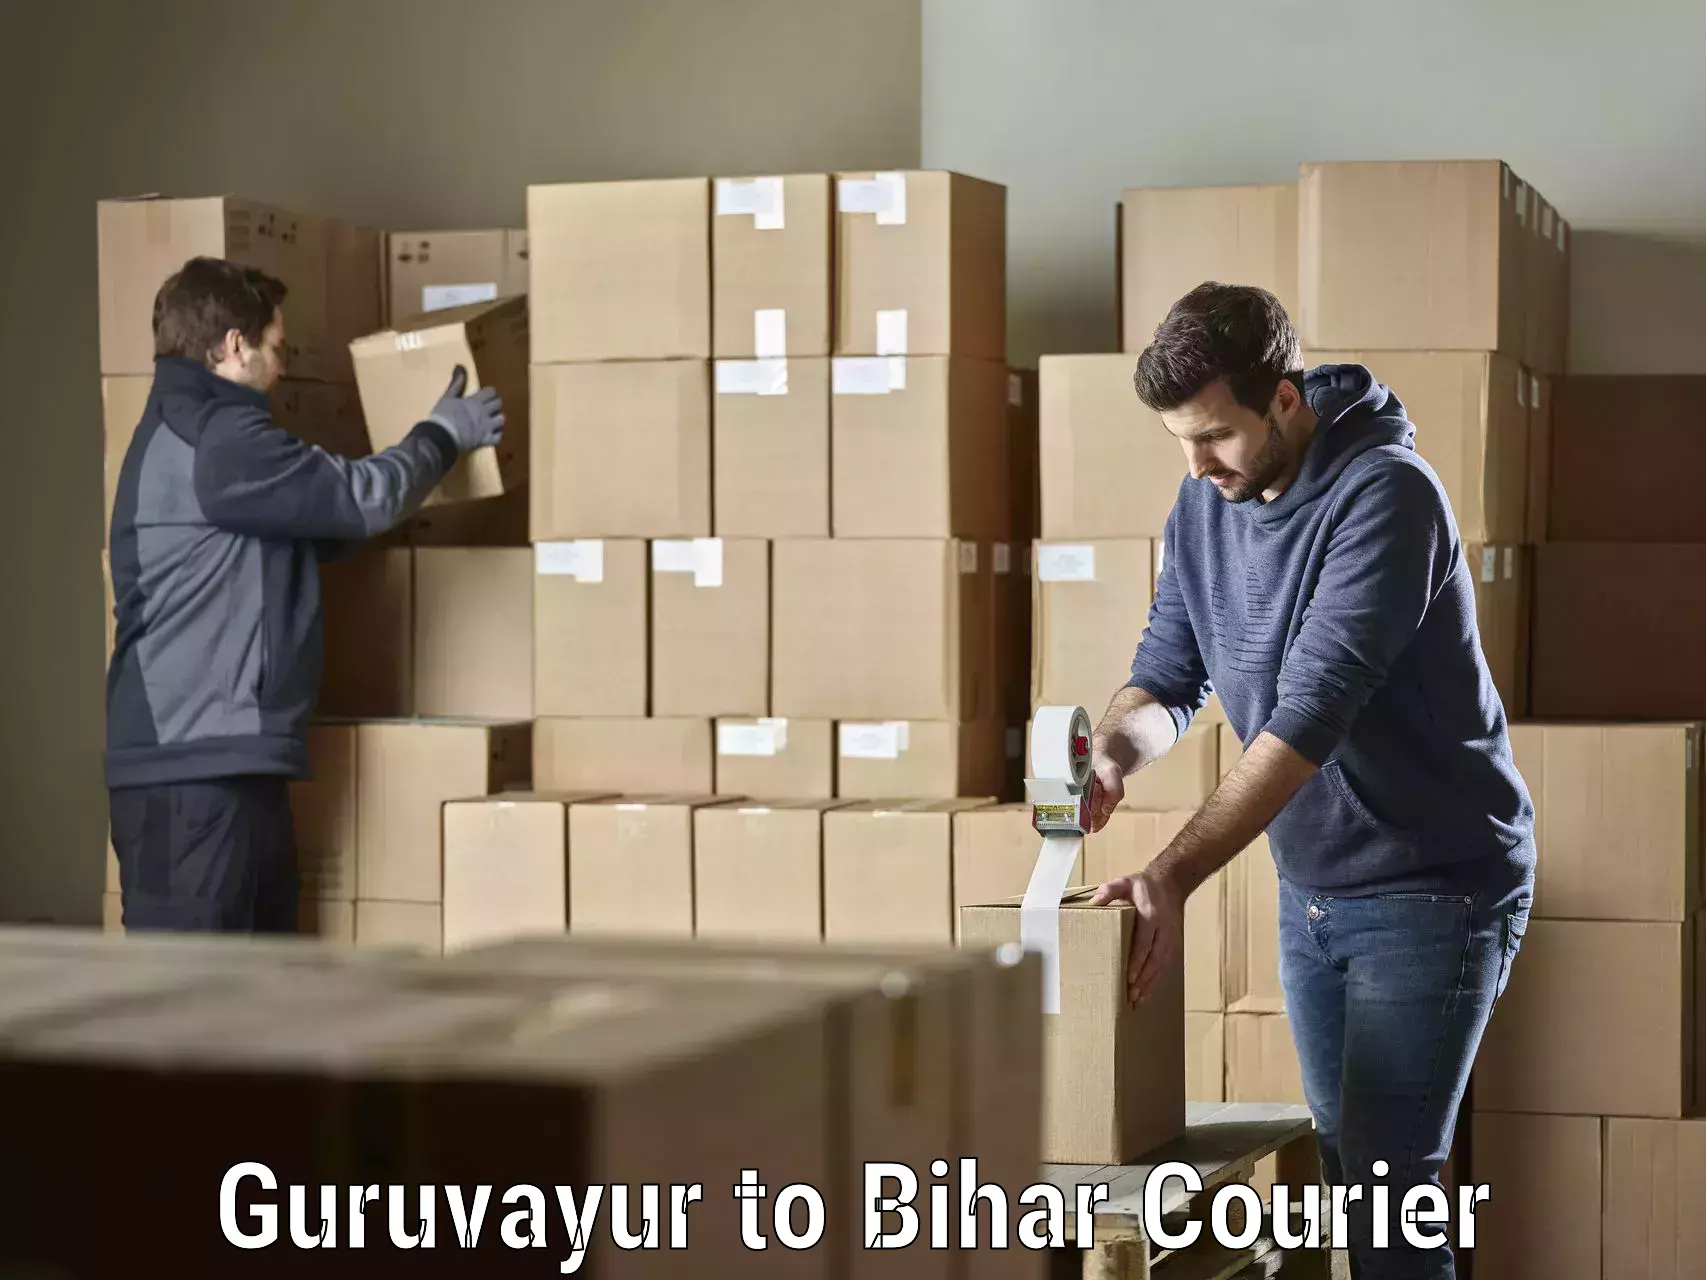 Digital courier platforms Guruvayur to Barachati